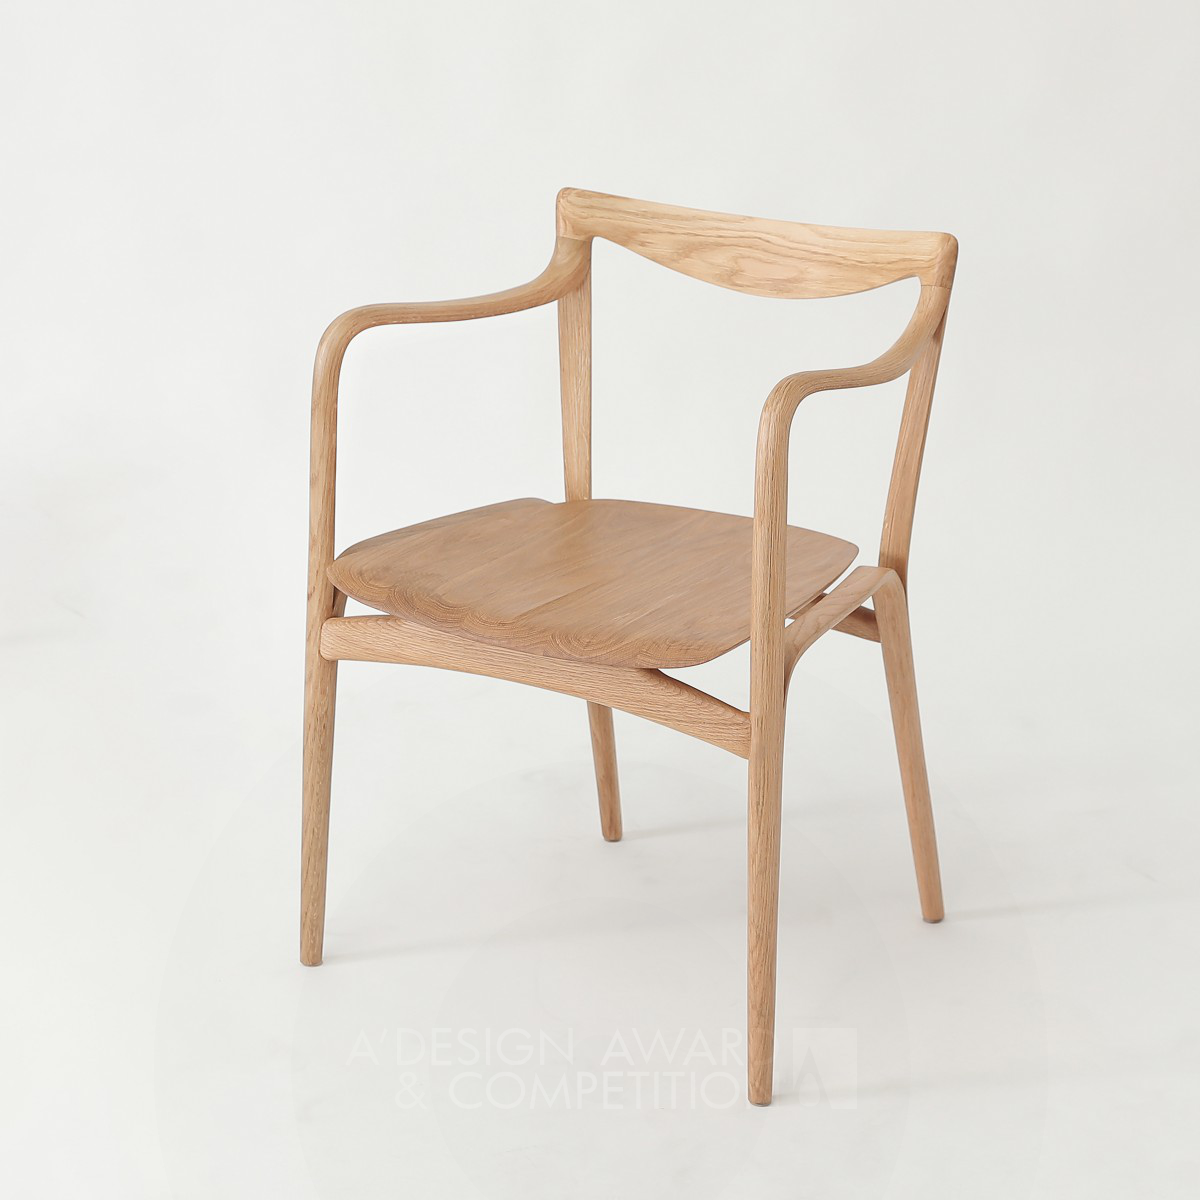 Xu Le wins Bronze at the prestigious A' Furniture Design Award with Smile Chair.